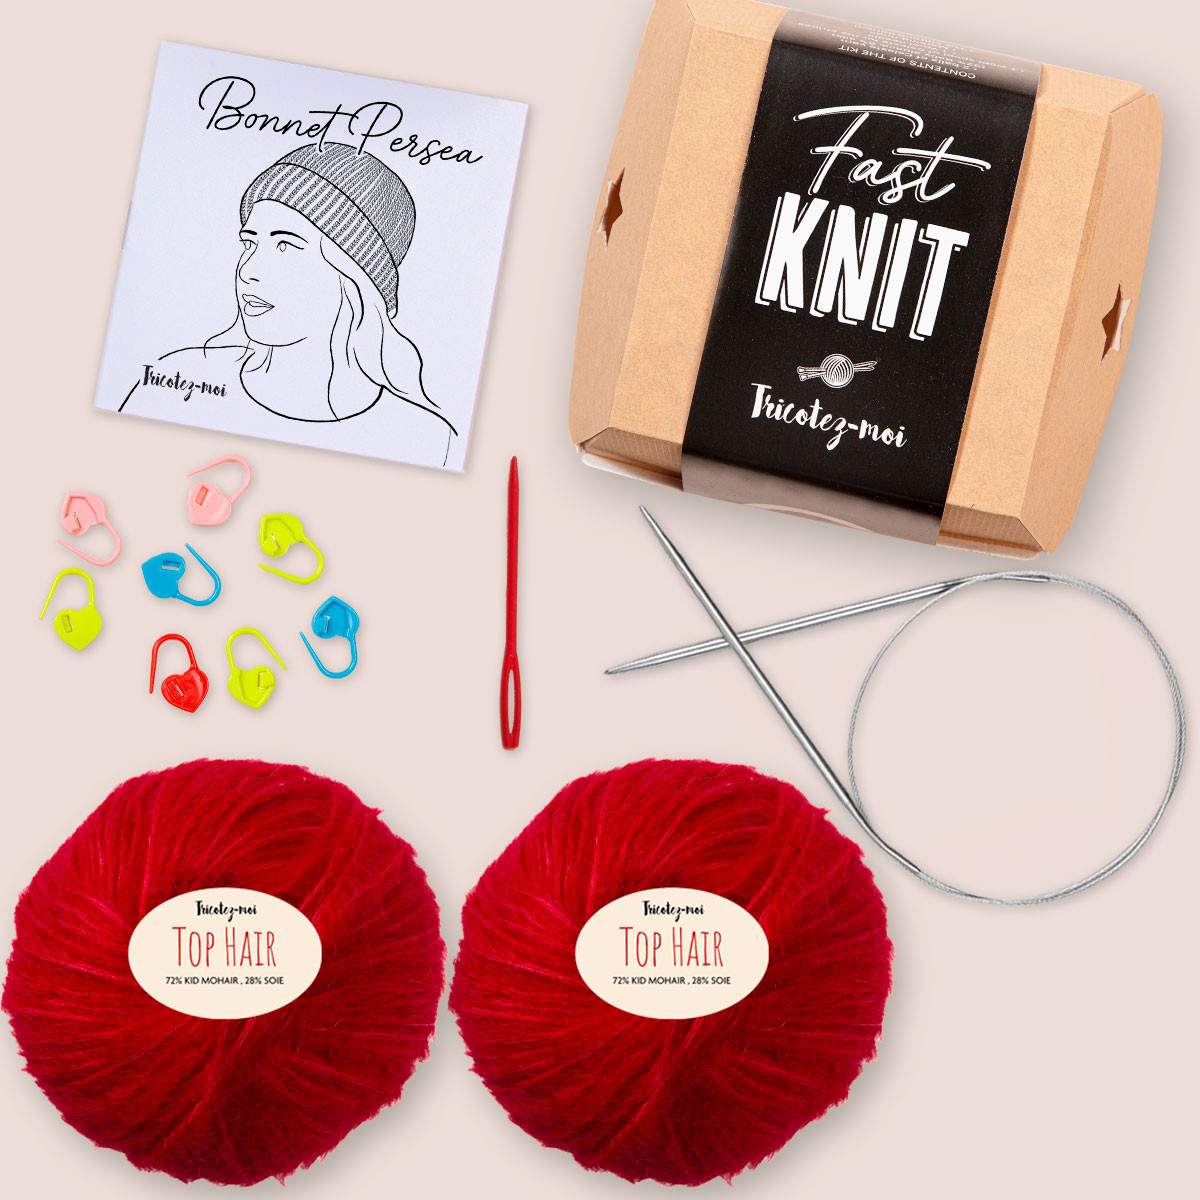 Bonnet Persea - Fast Knit box tricot